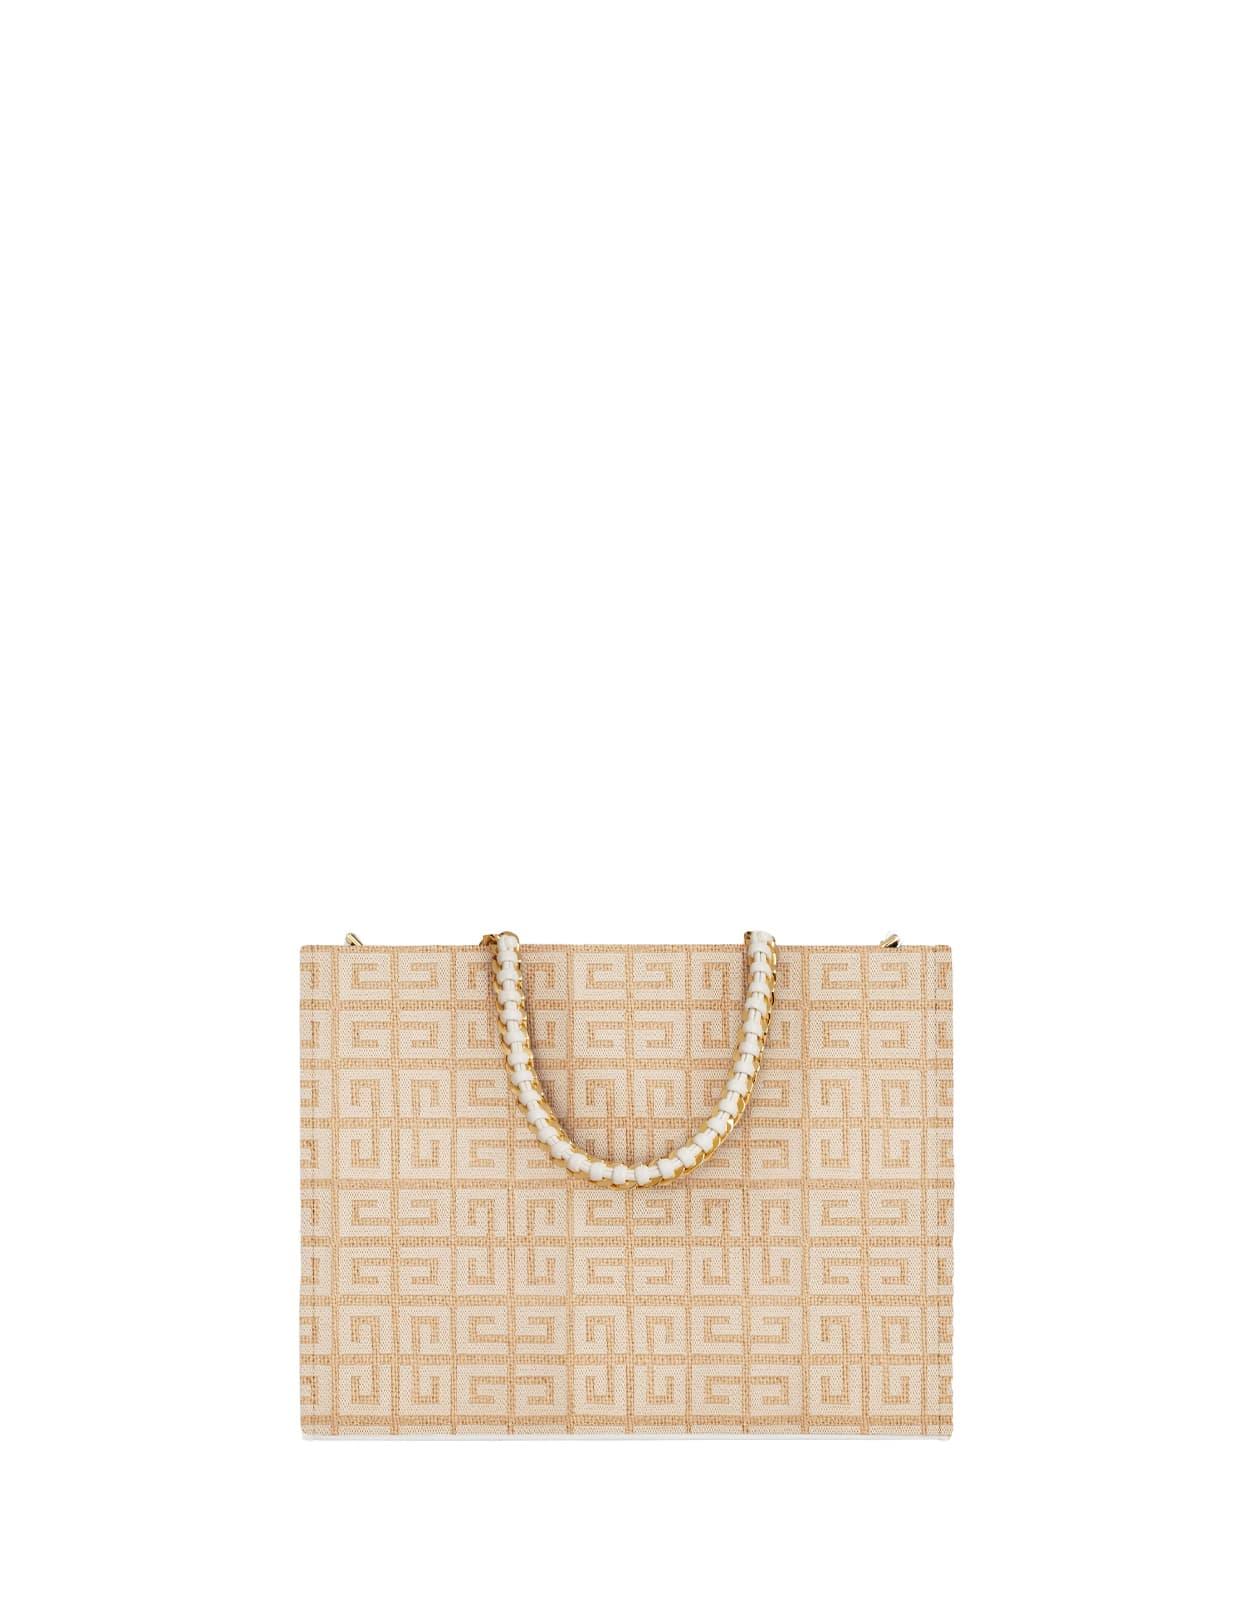 Jute Shopper My other bag is Chanel as a shopping bag or beach bag